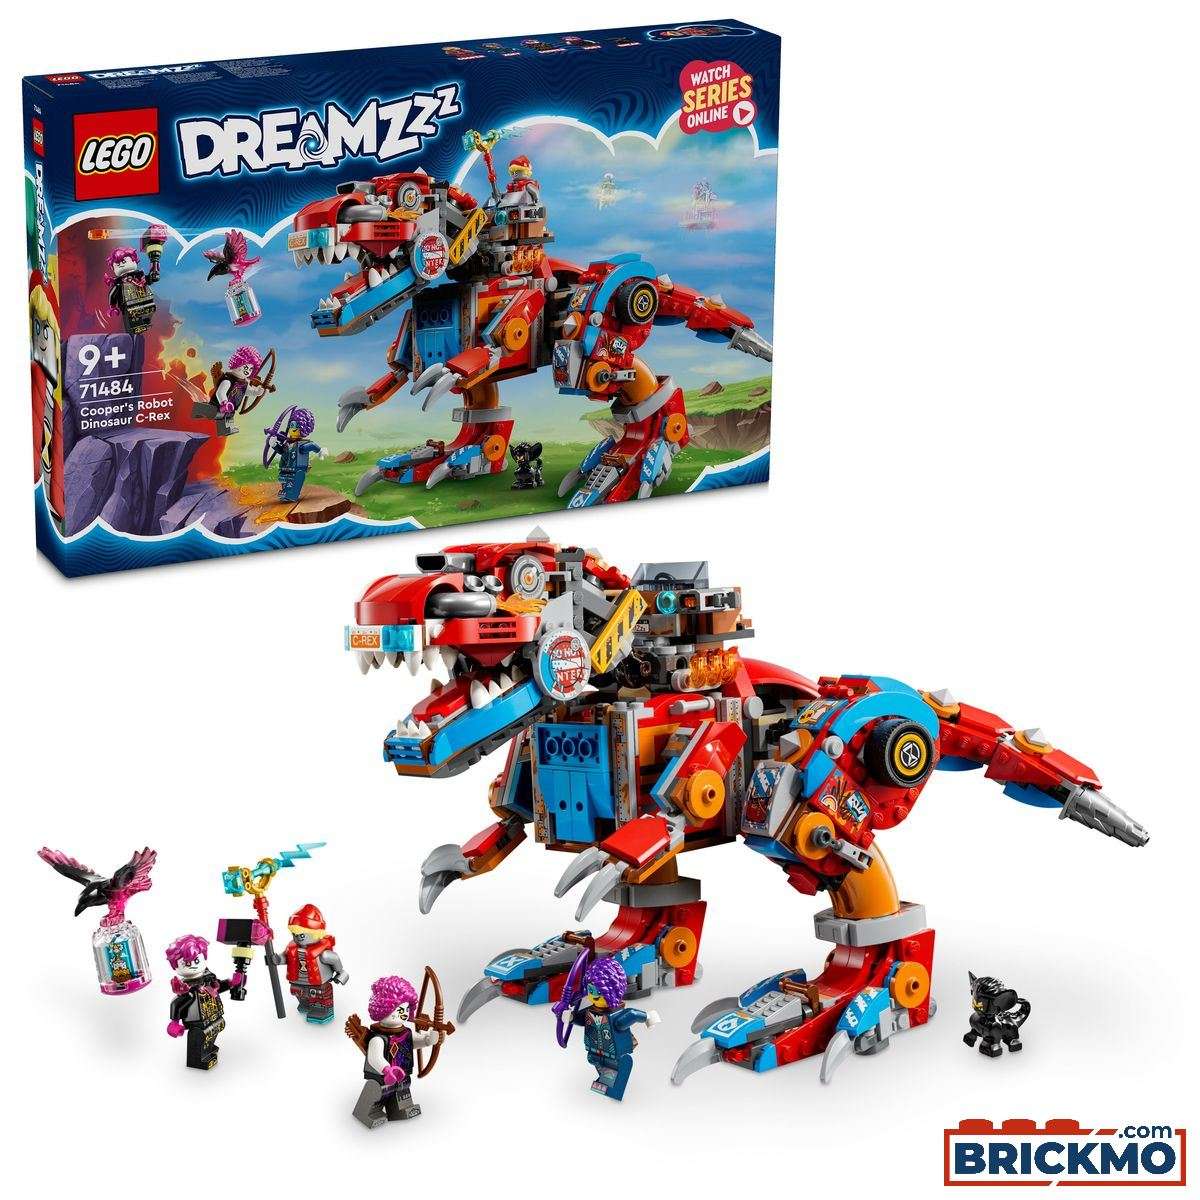 LEGO DreamZzz 71484 Cooper C-Rex robotdinoszaurusza 71484